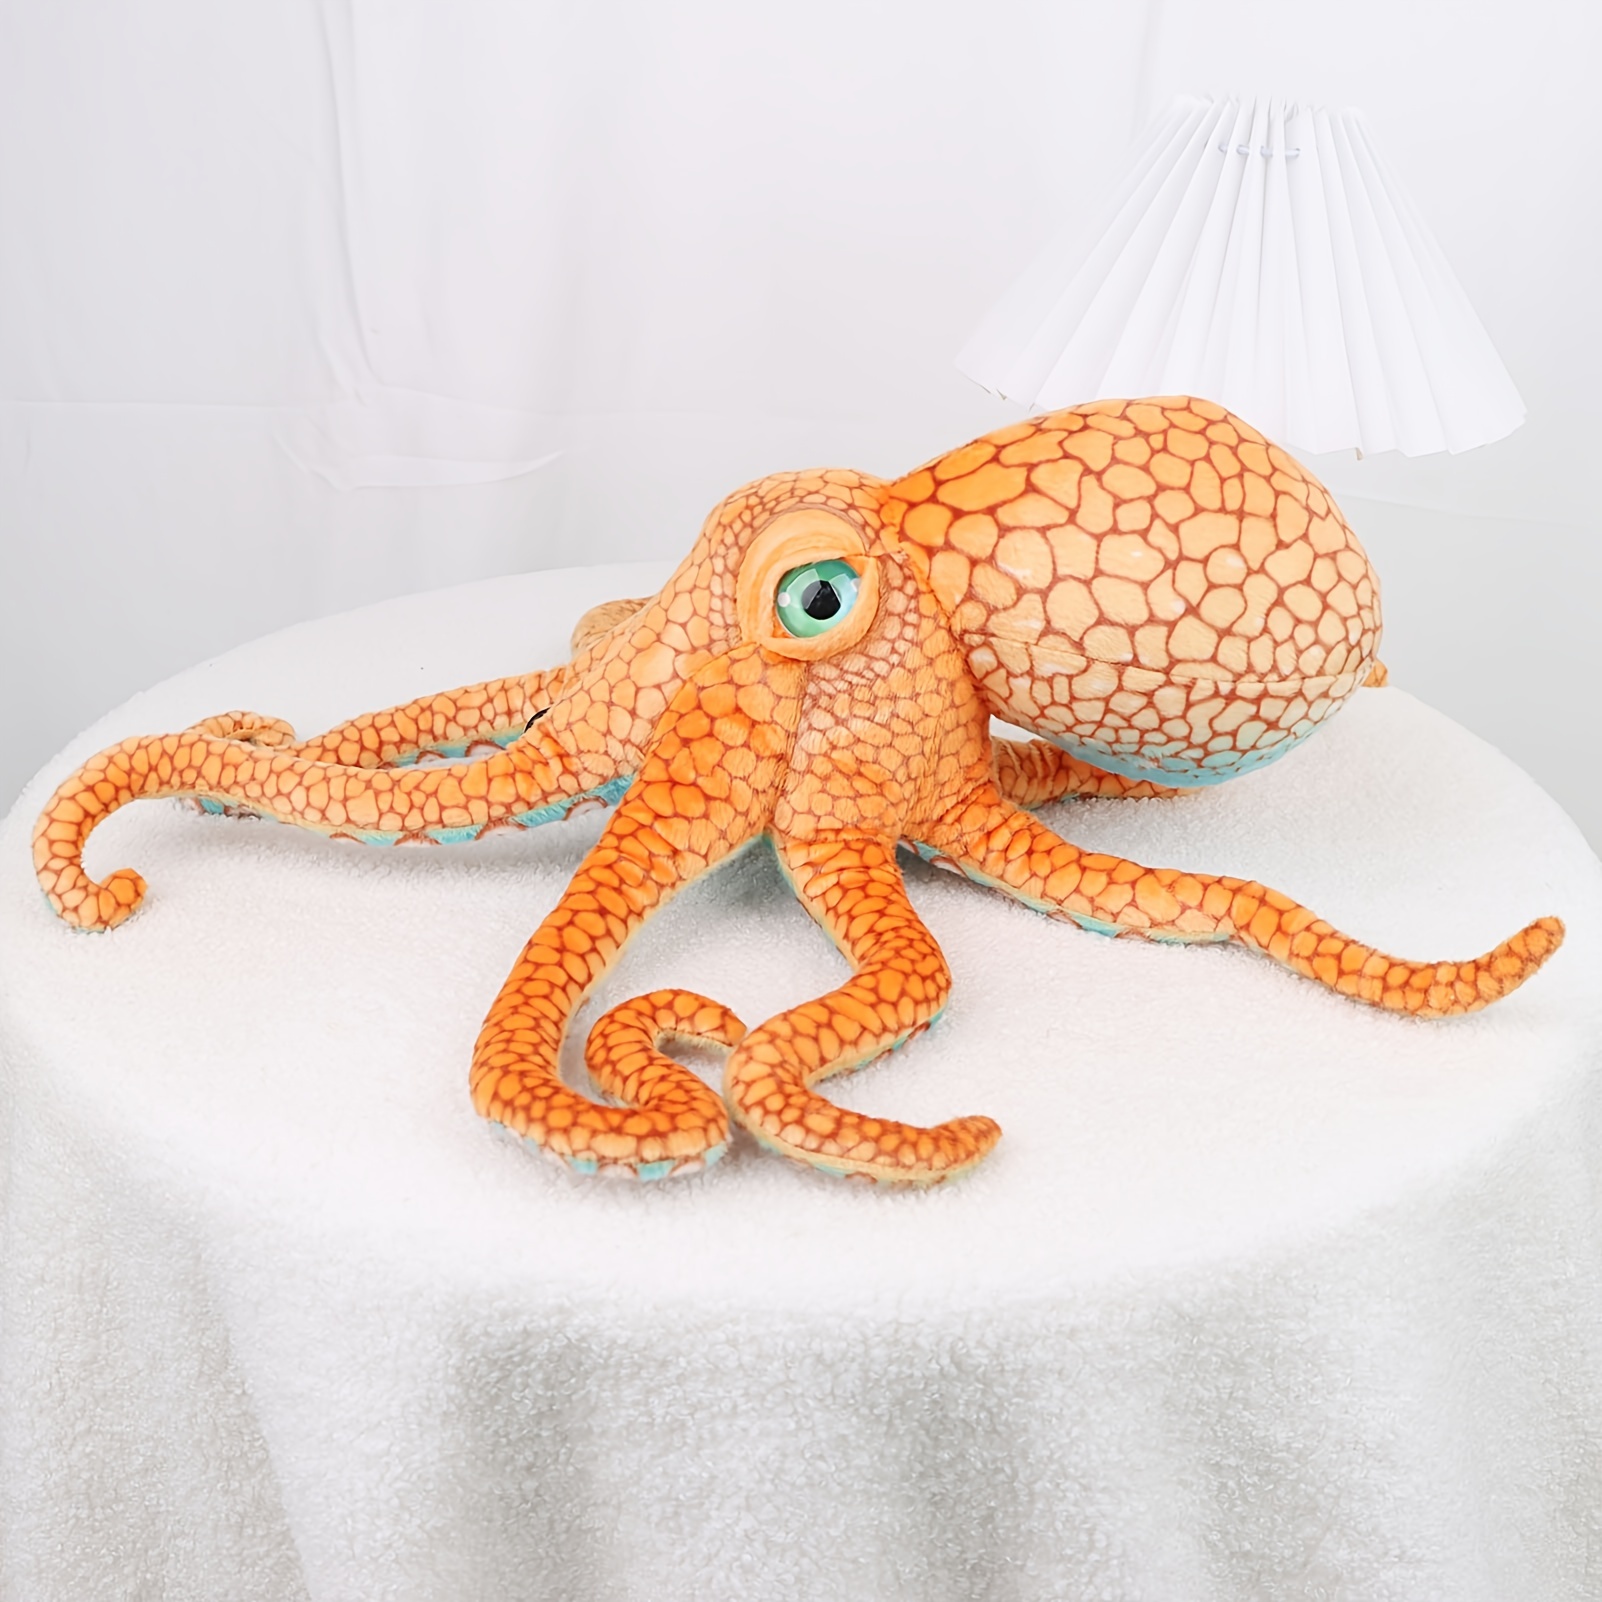 Octopus Cake - Decorated Cake by MayBel's cakes - CakesDecor